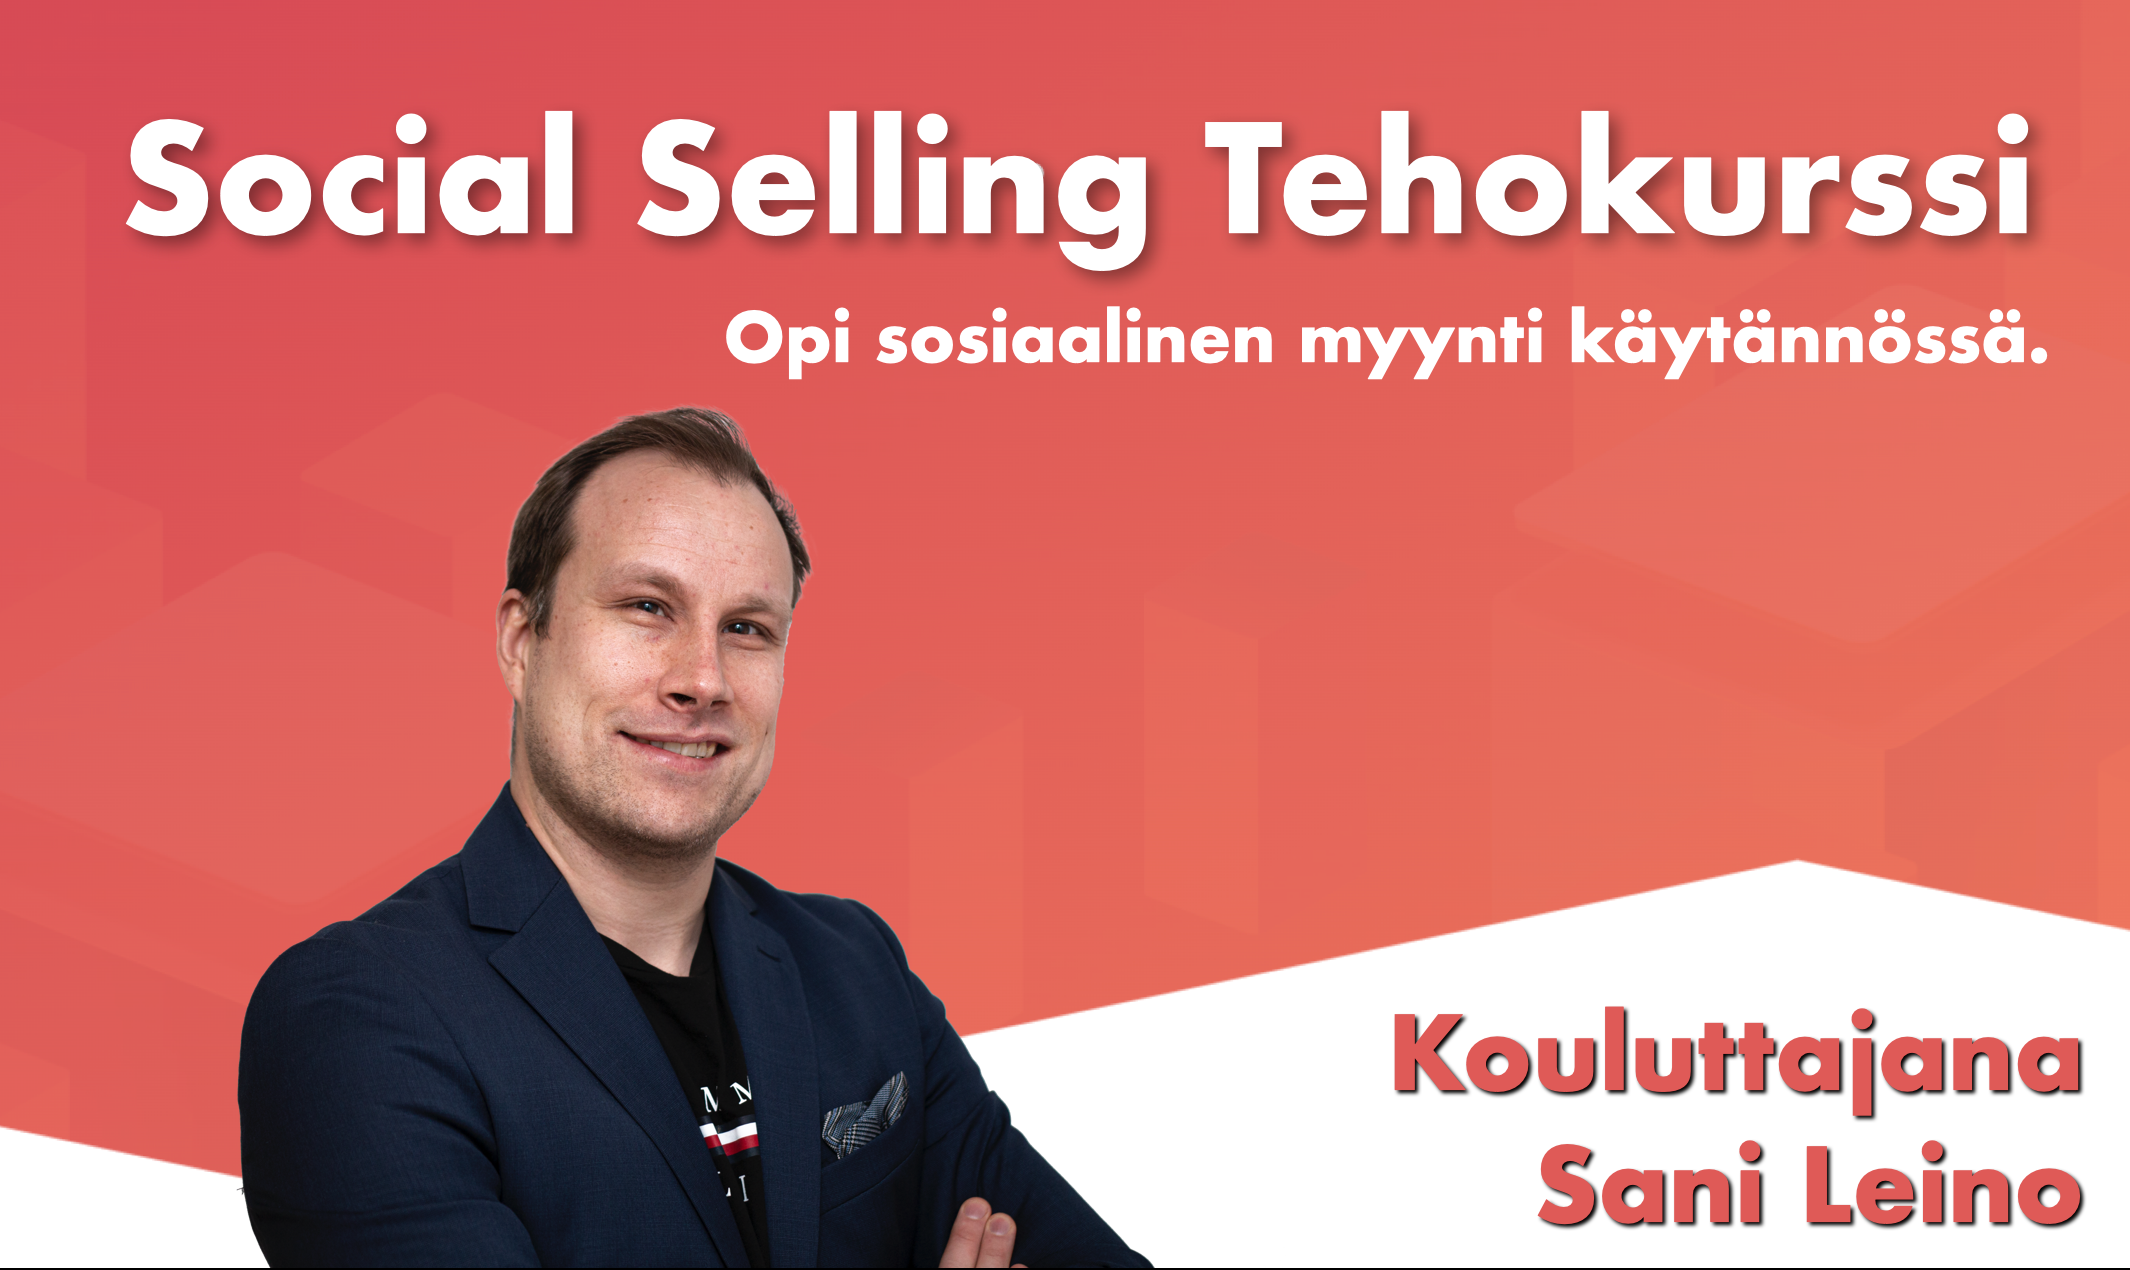 Social Selling Tehokurssi myyjille